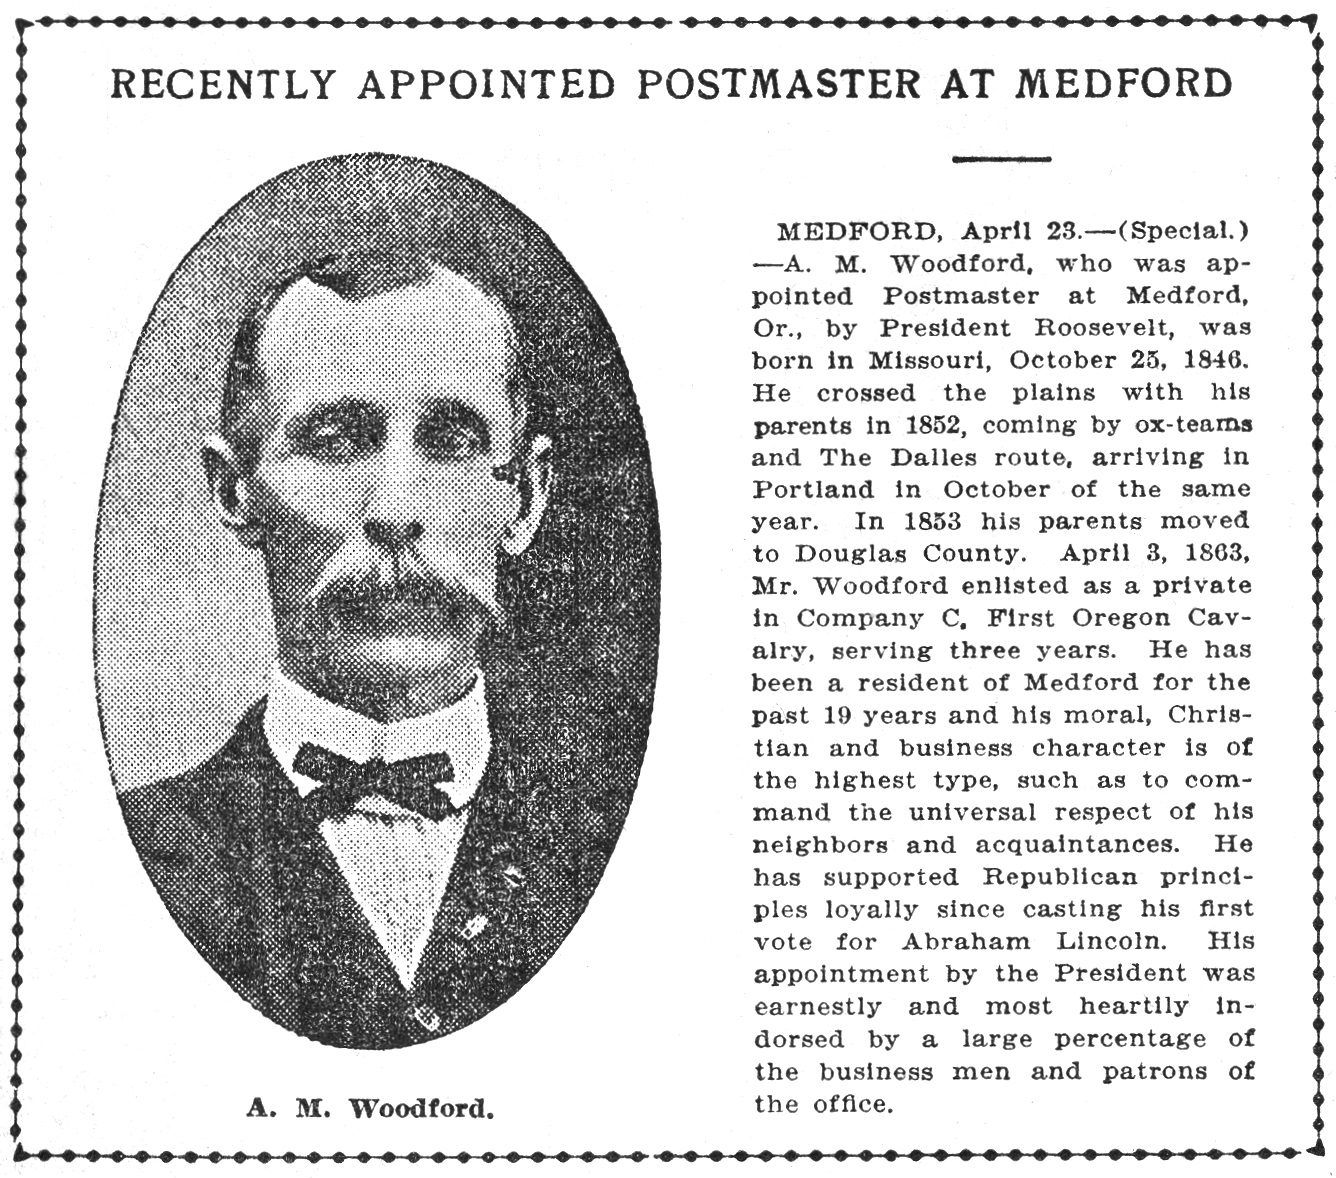 Postmaster A. M. Woodford, April 25, 1904 Oregonian